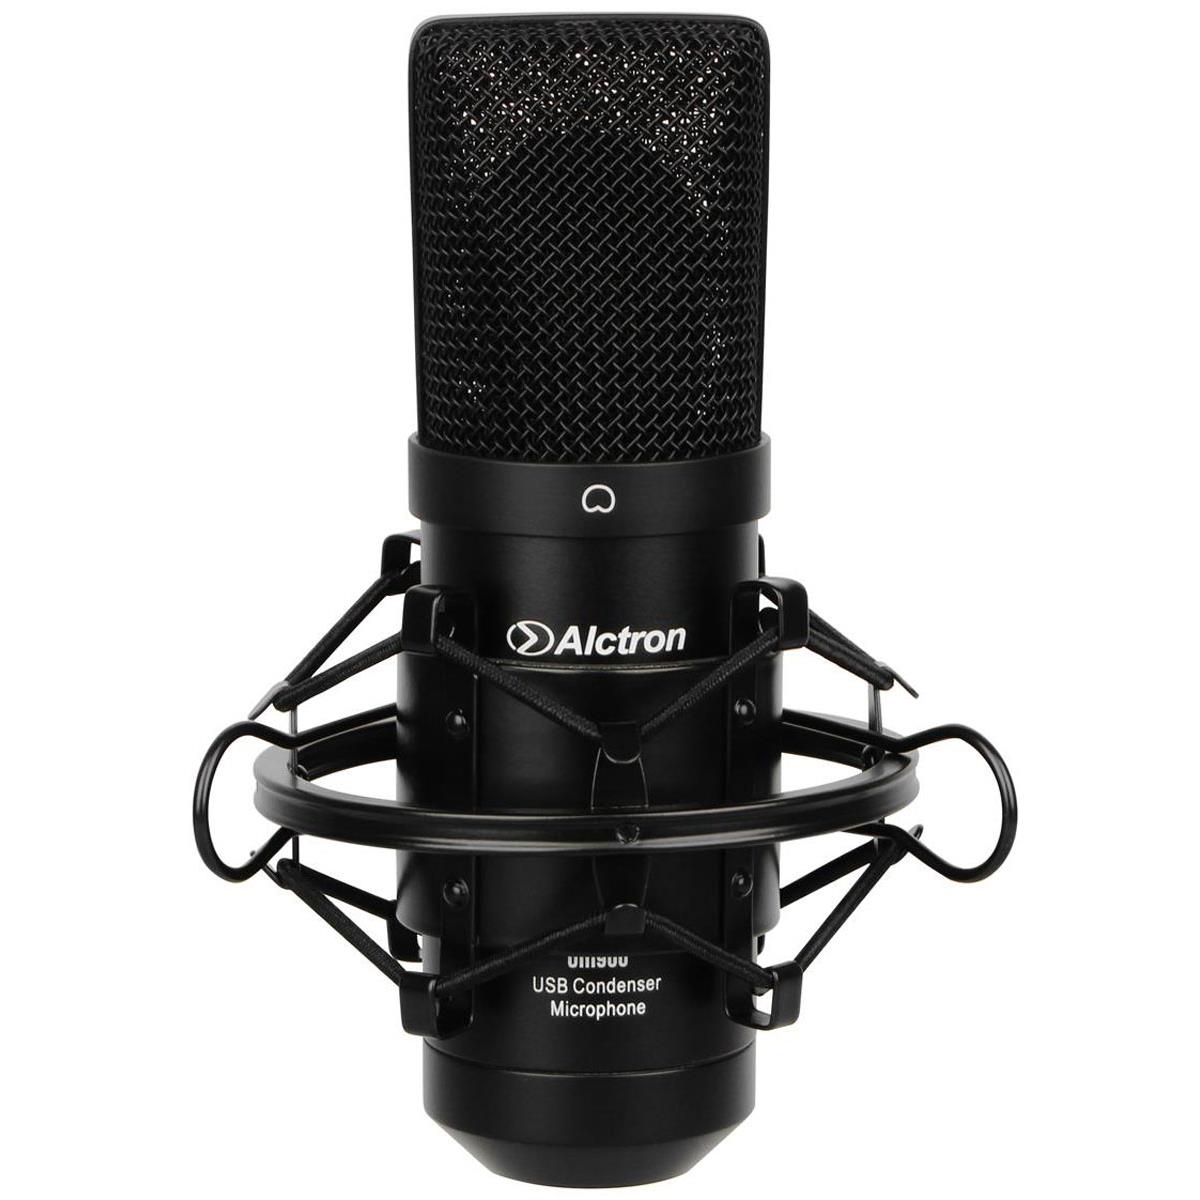 Image of Alctron UM900 USB Condenser Microphone